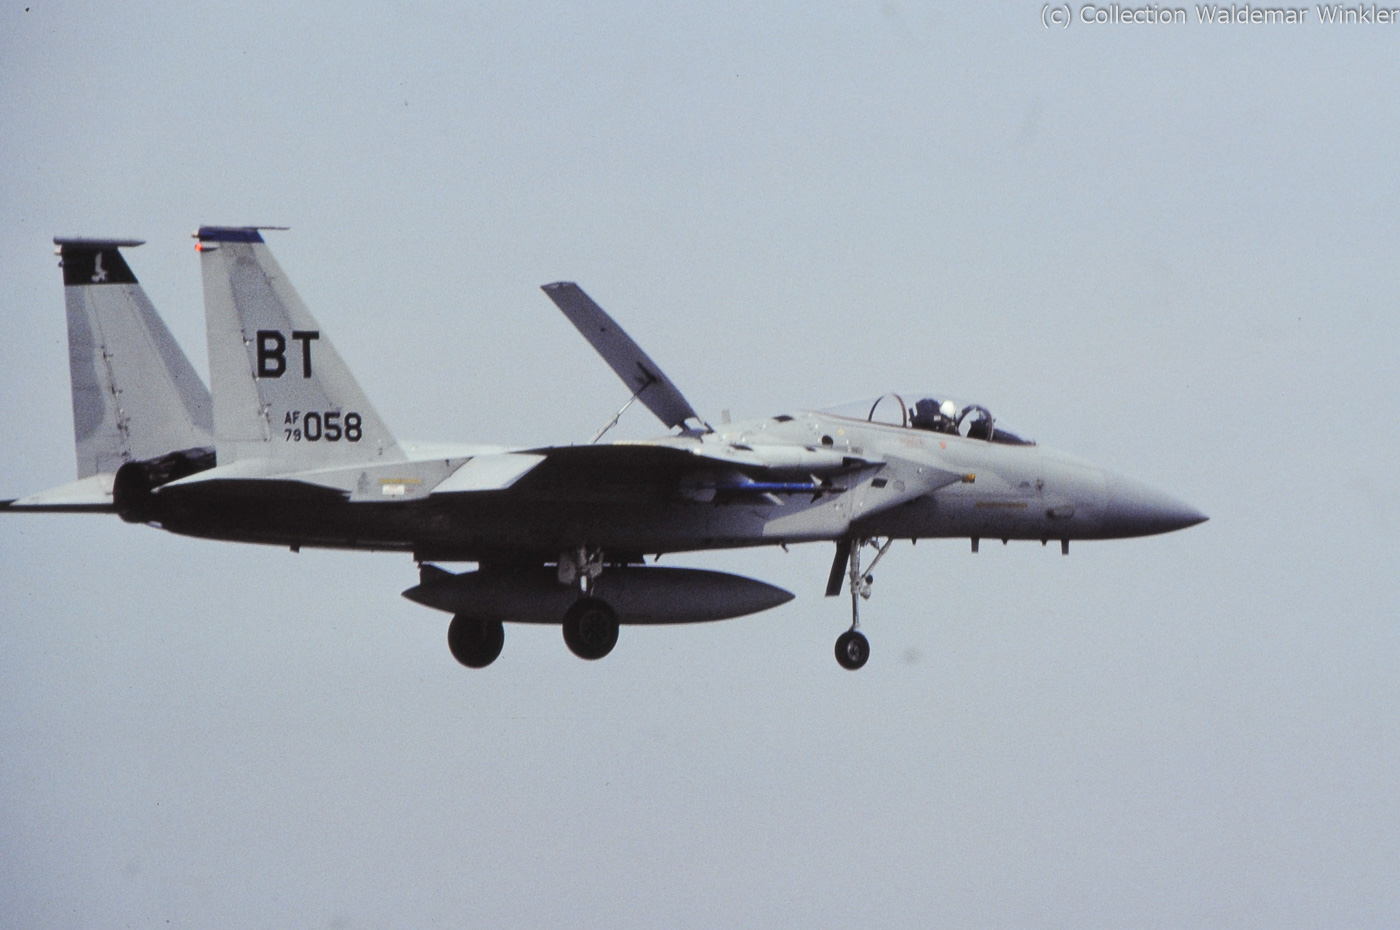 F-15A_Strike_Eagle_DSC_2889.jpg